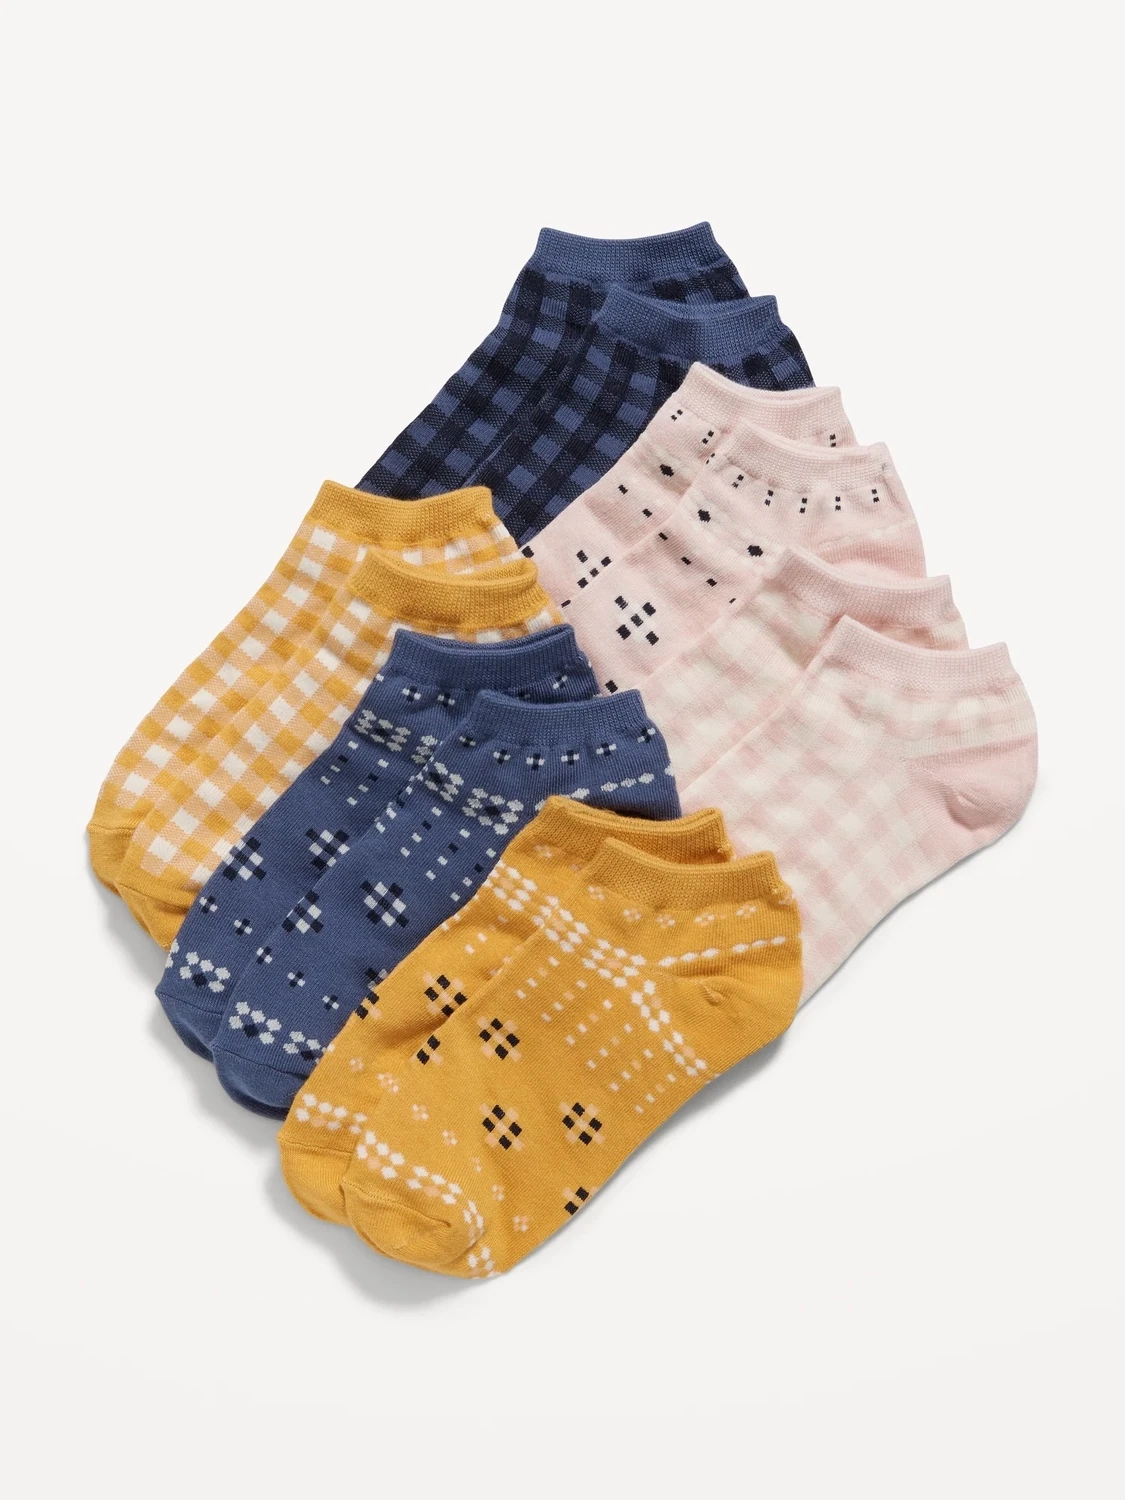 Old Navy Patterned Ankle Socks 6-Pack for Girls, Size: 28-31, Color: Multi